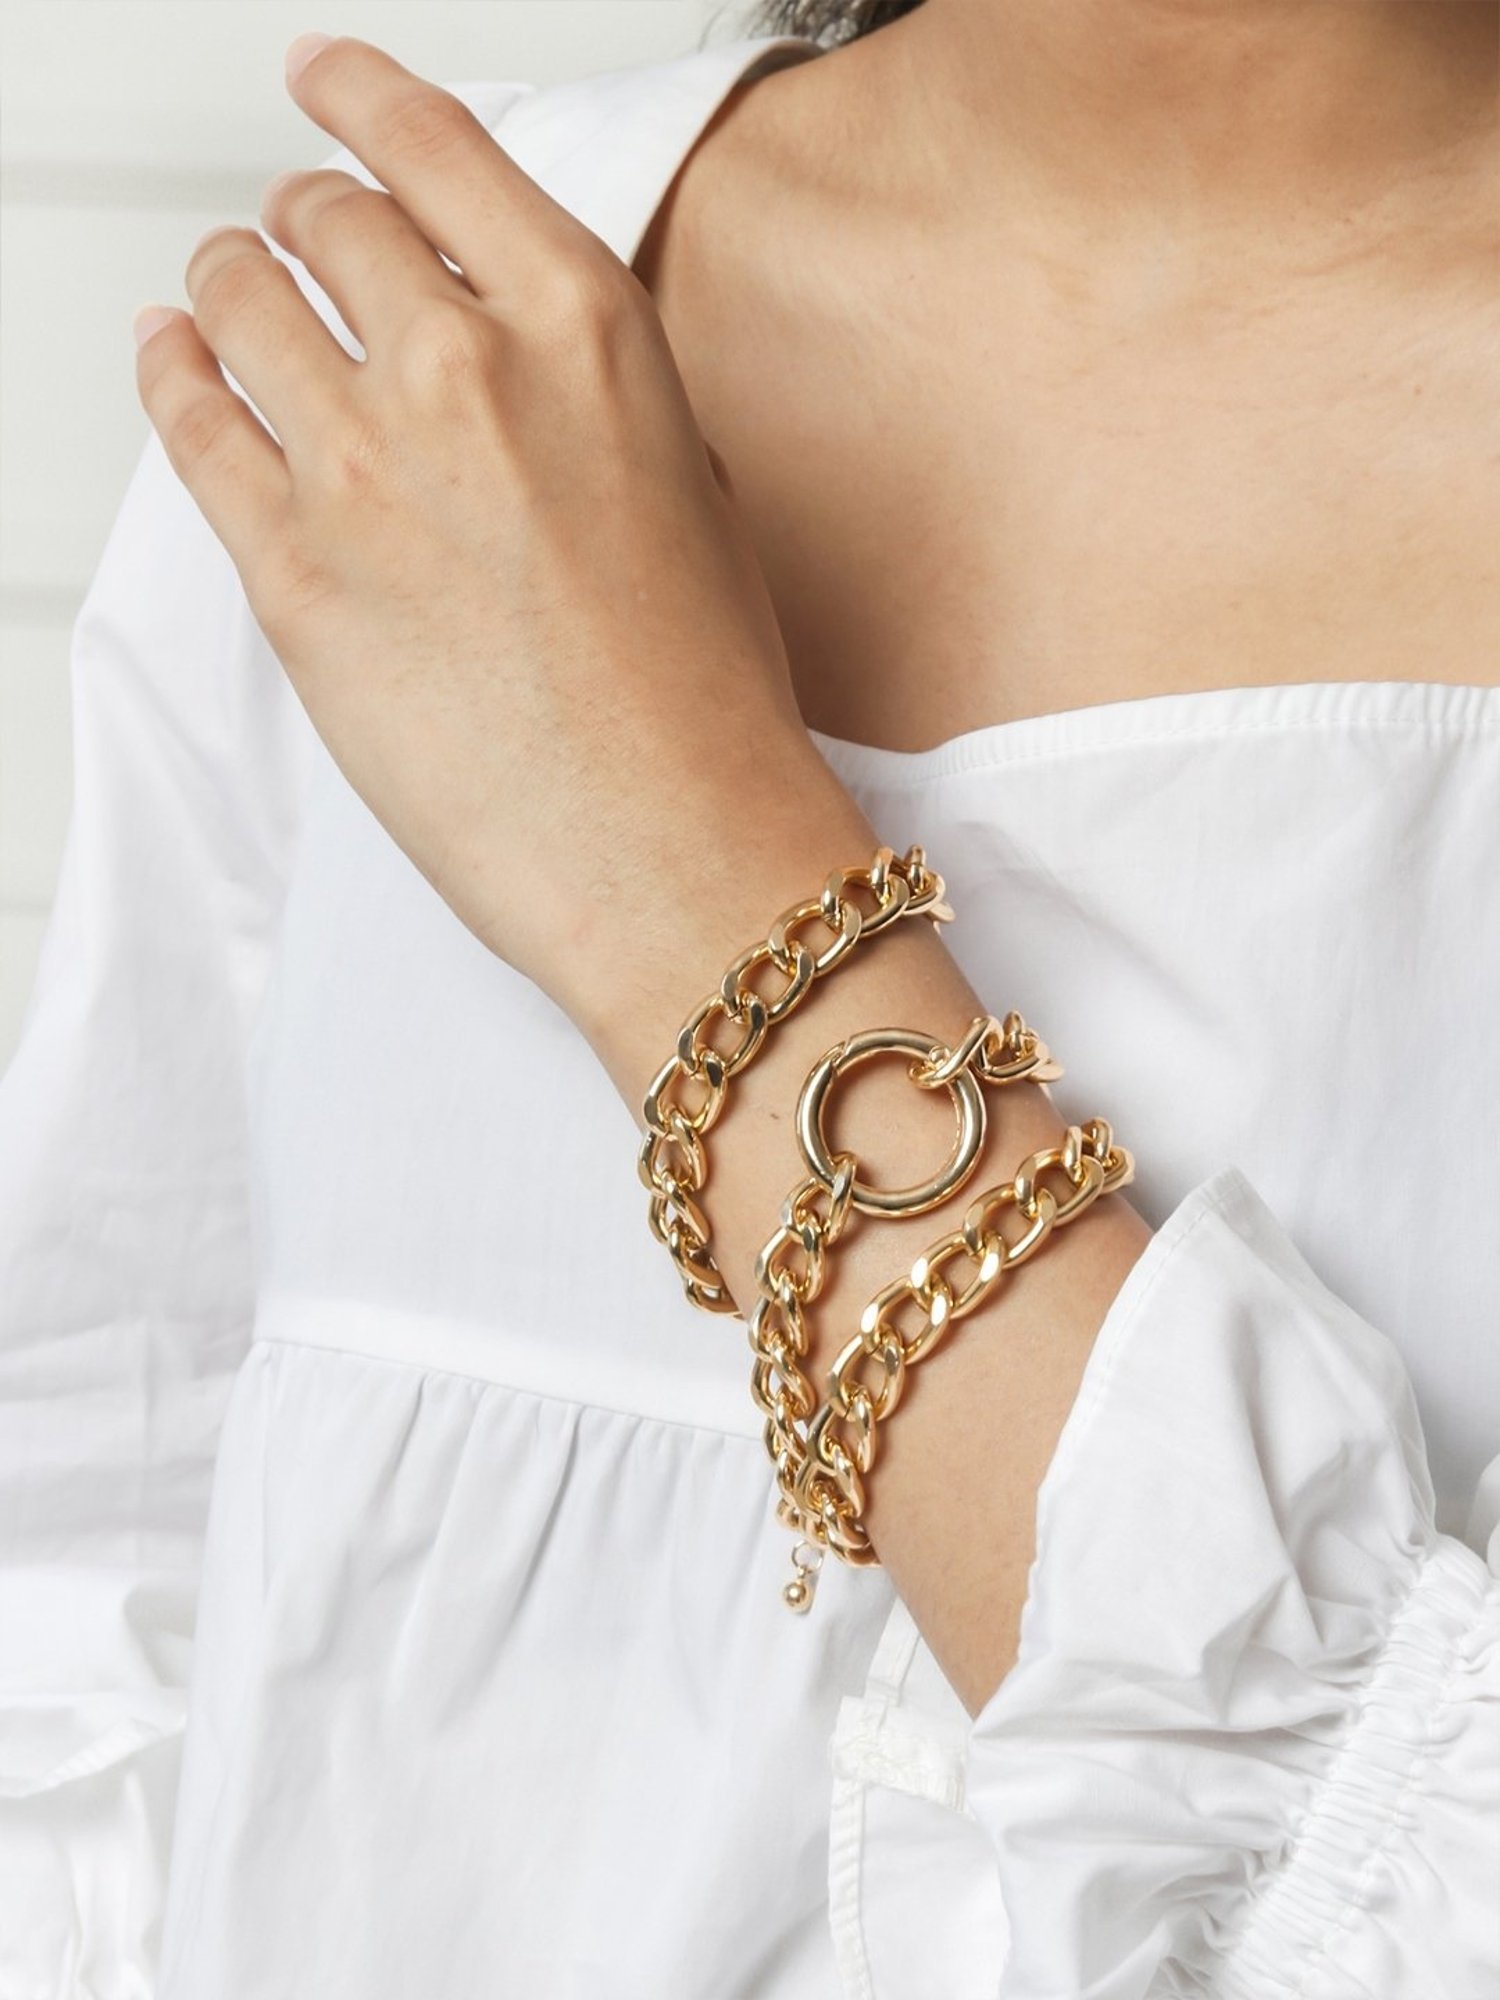 Toniq Gold Plated Set Of 3 Floral Adjustable Bracelets For Women